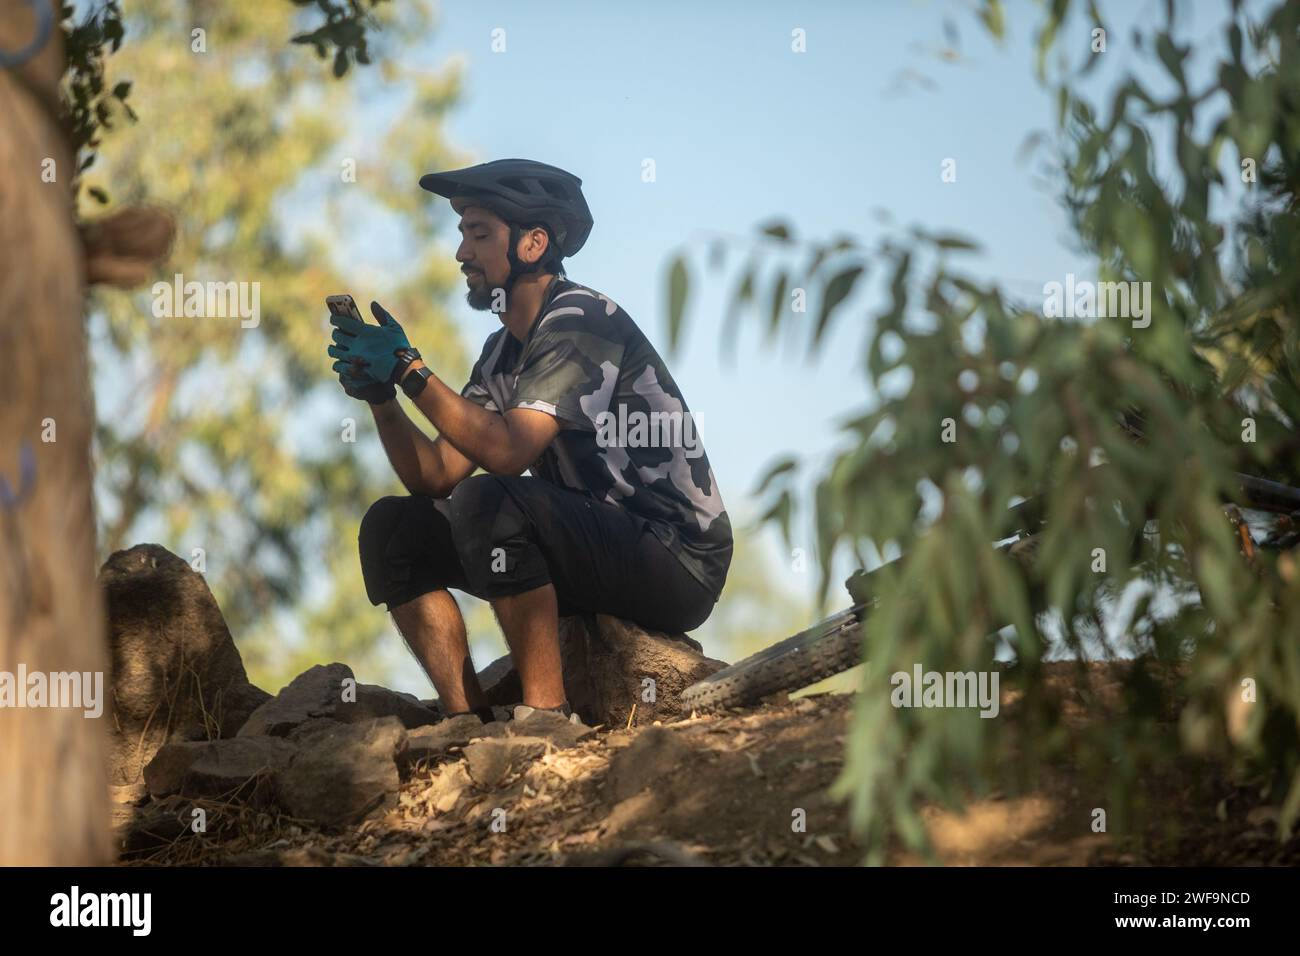 Latino male bike rider checking his phone sitting on a rock Stock Photo